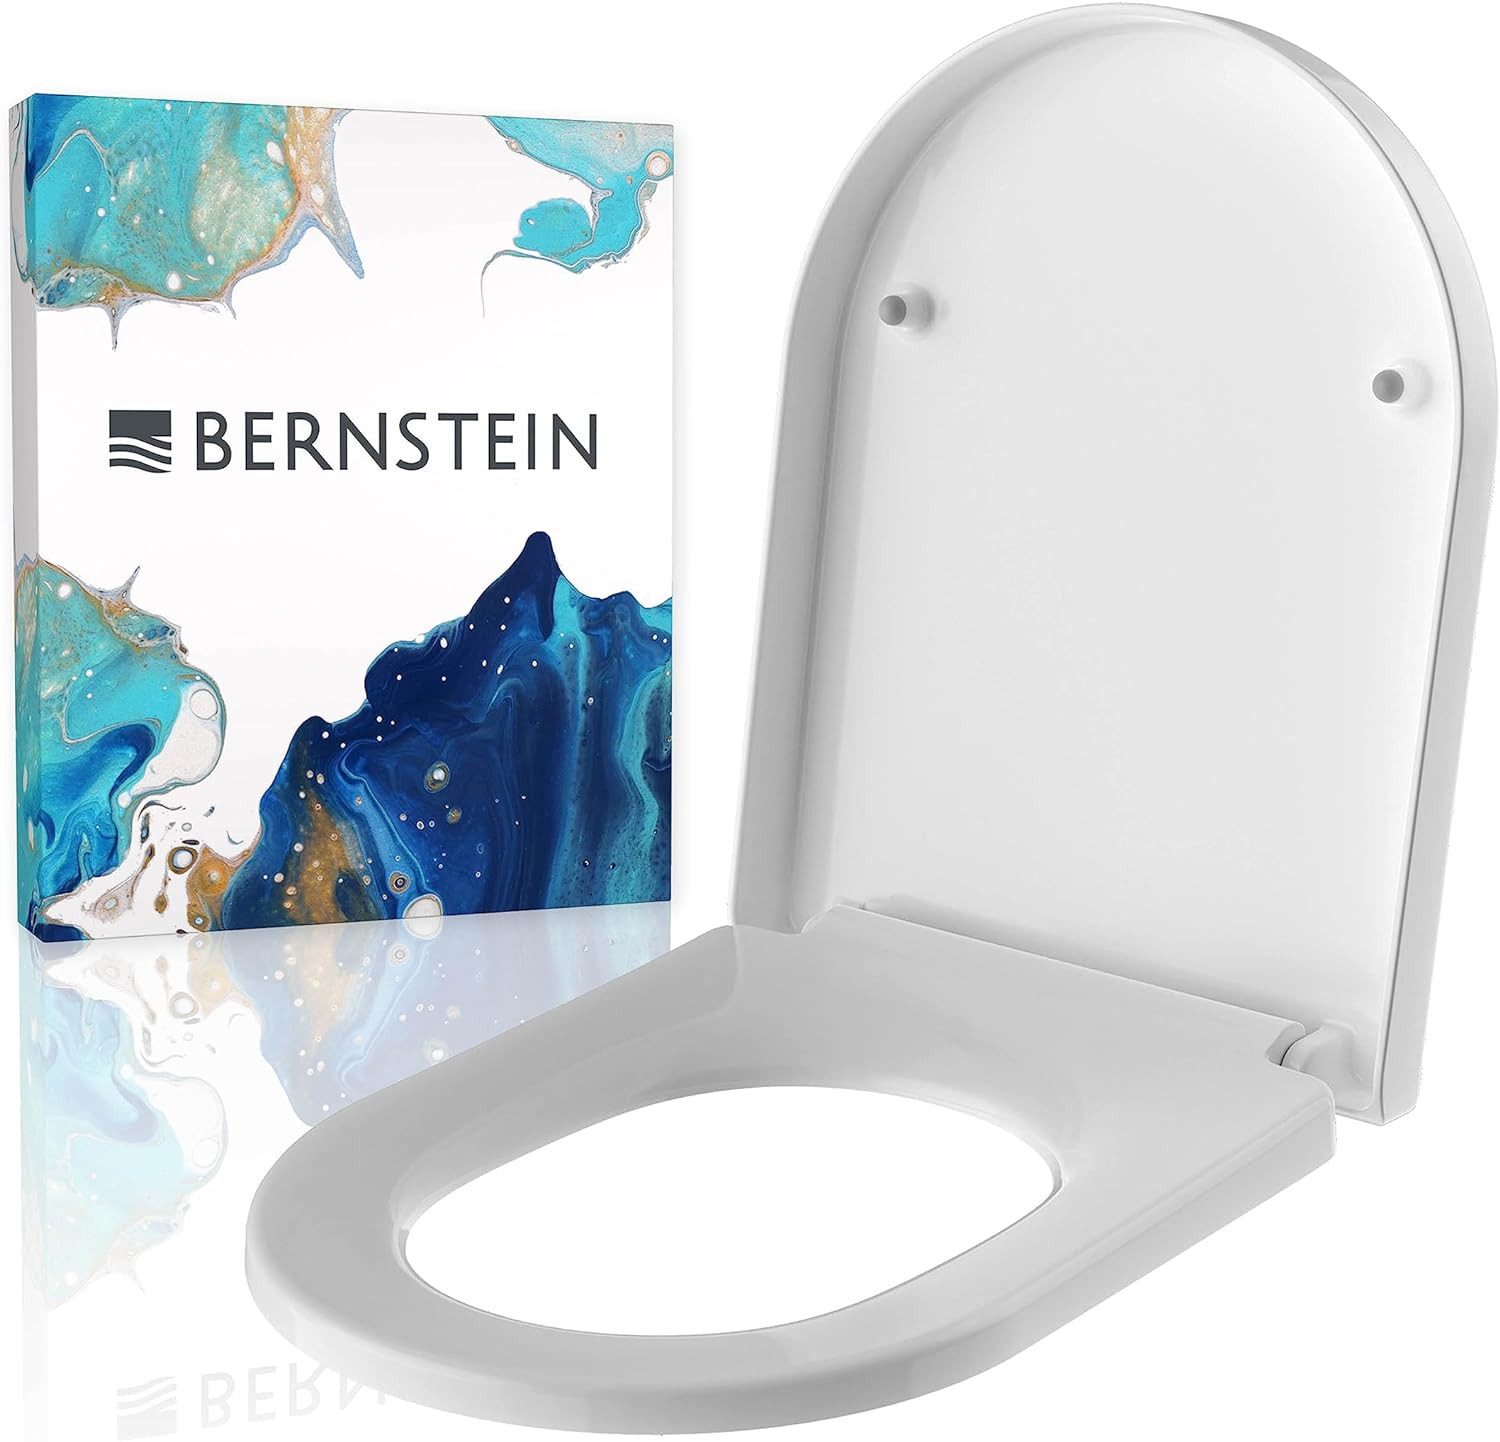 Bernstein WC-Sitz U1002 (Komplett-Set, inkl. Befestigungsmaterial), weiß / D-Form / Absenkautomatik / LED Licht / abnehmbar / Duroplast